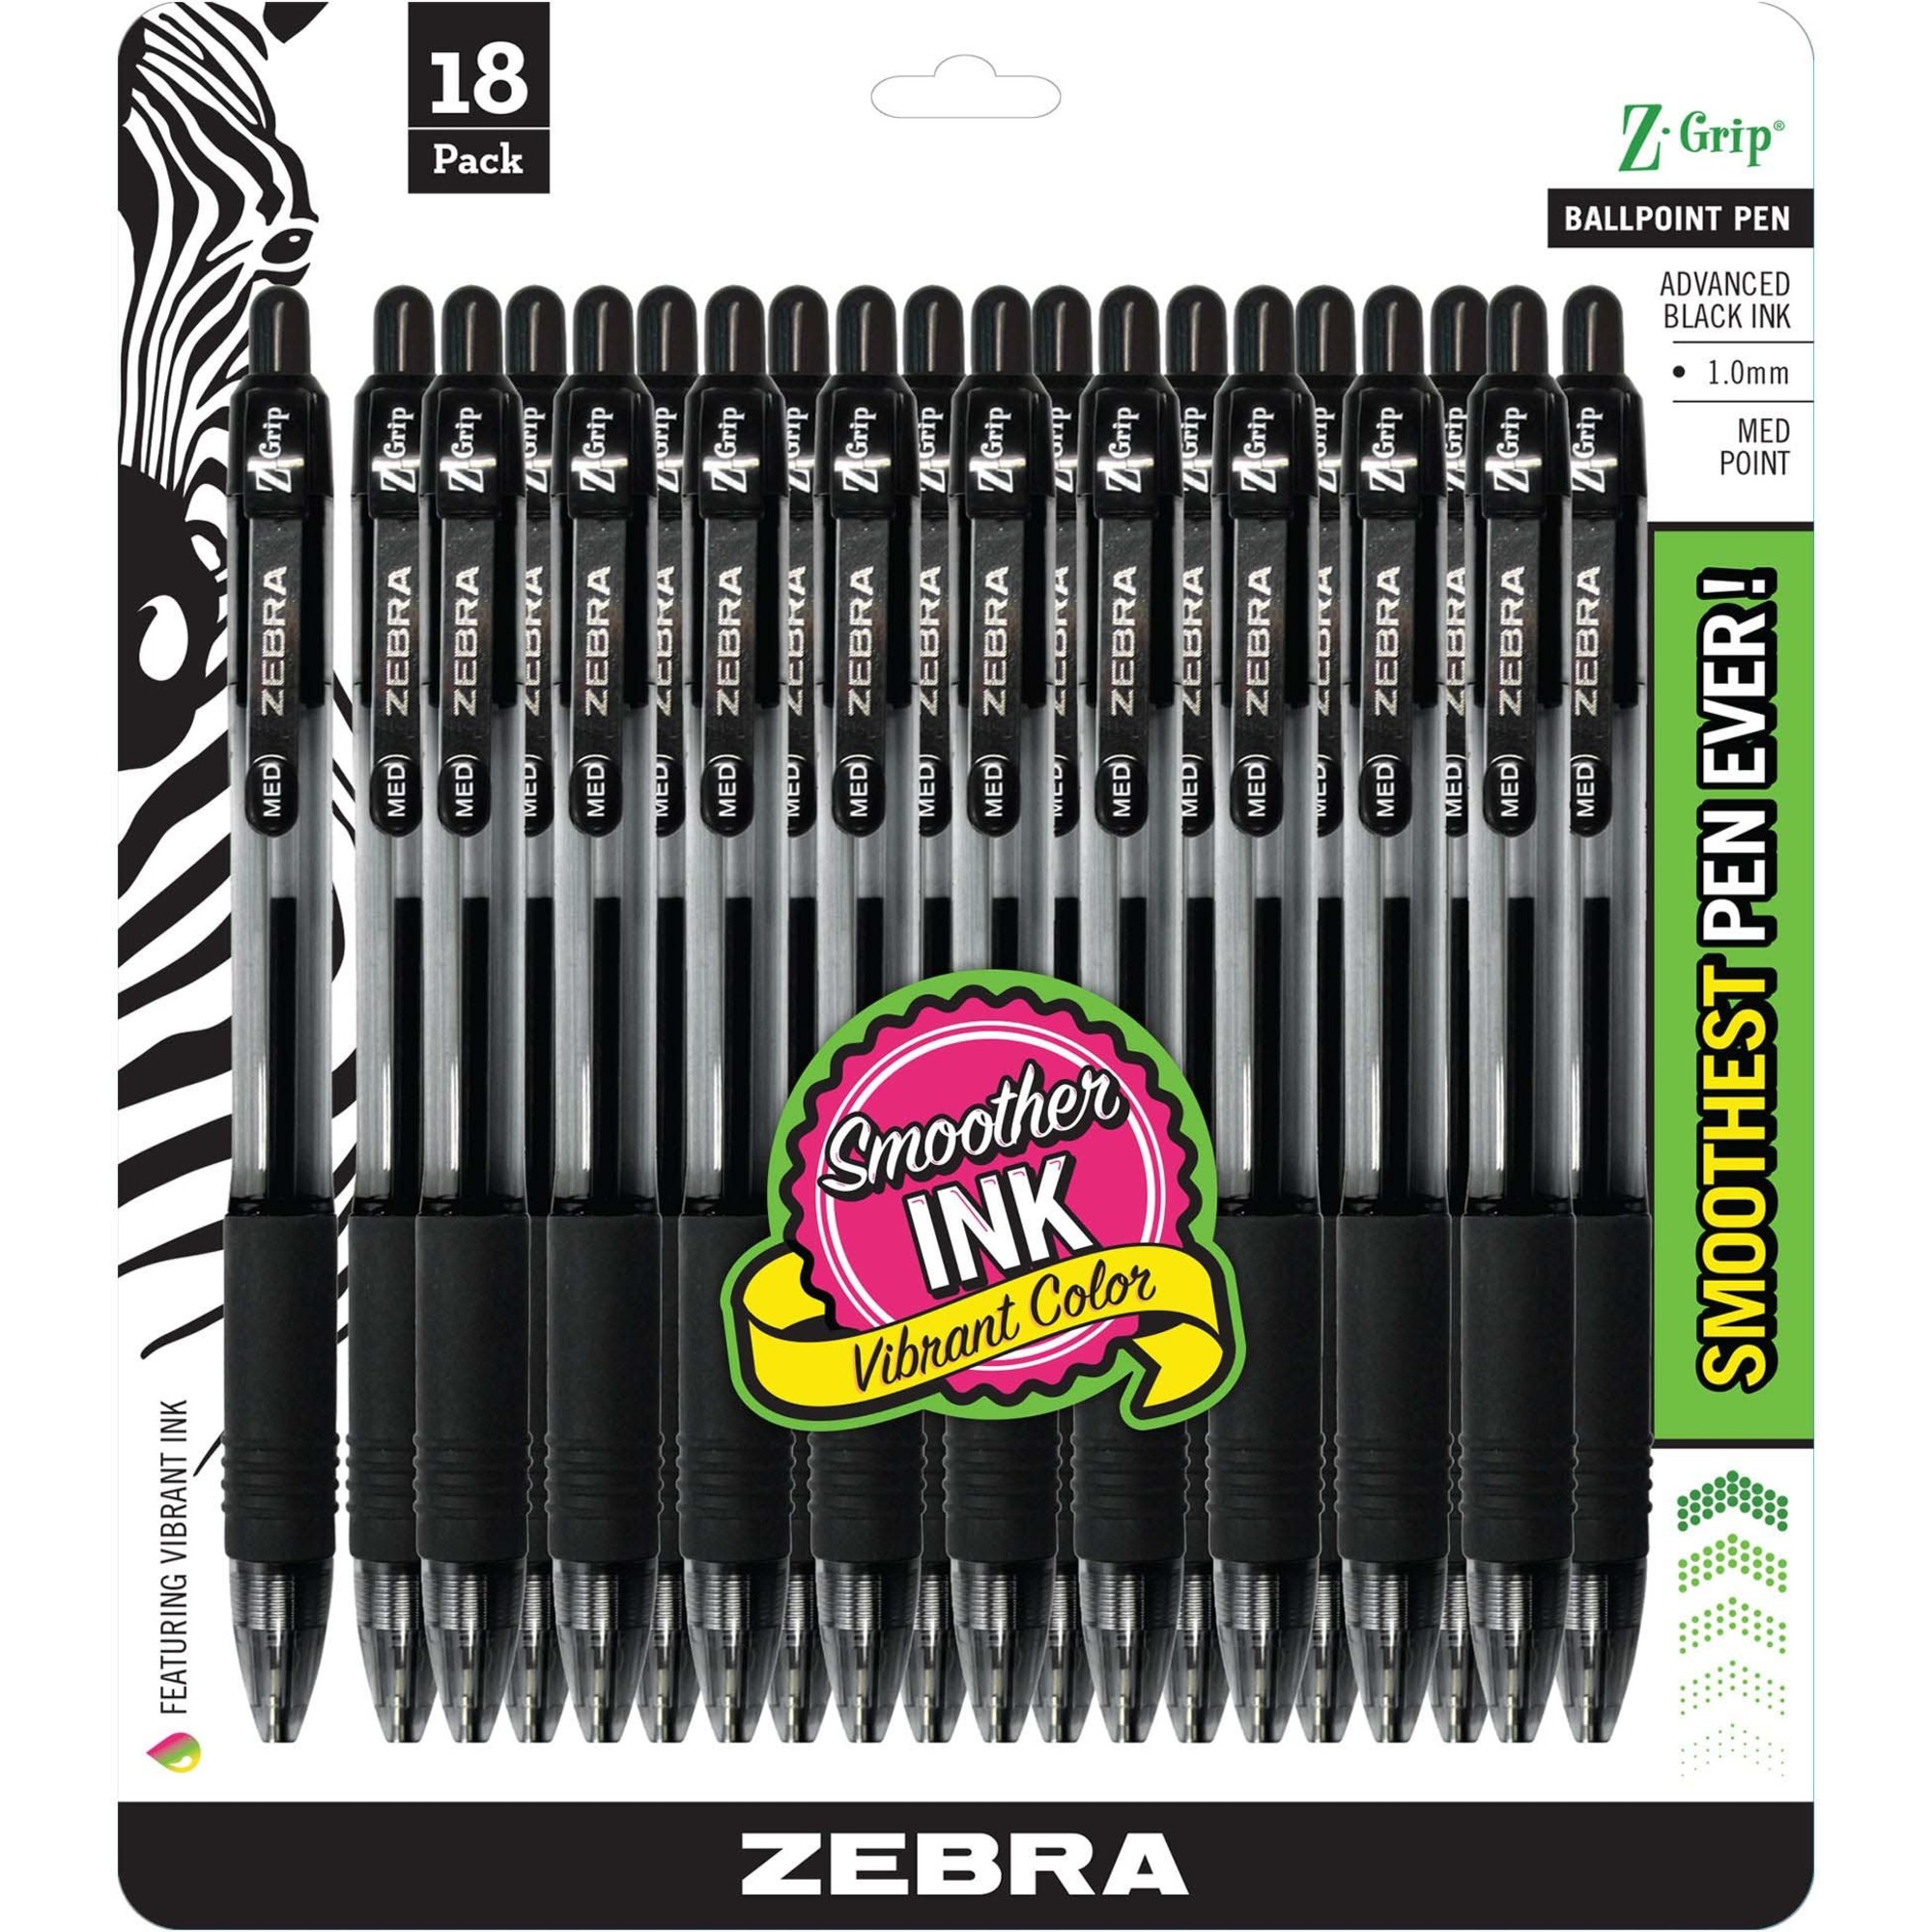 7 pcs High Gloss Powder Color Neutral Pen 0.8mm Ballpoint Writing Pens for  Journal Album